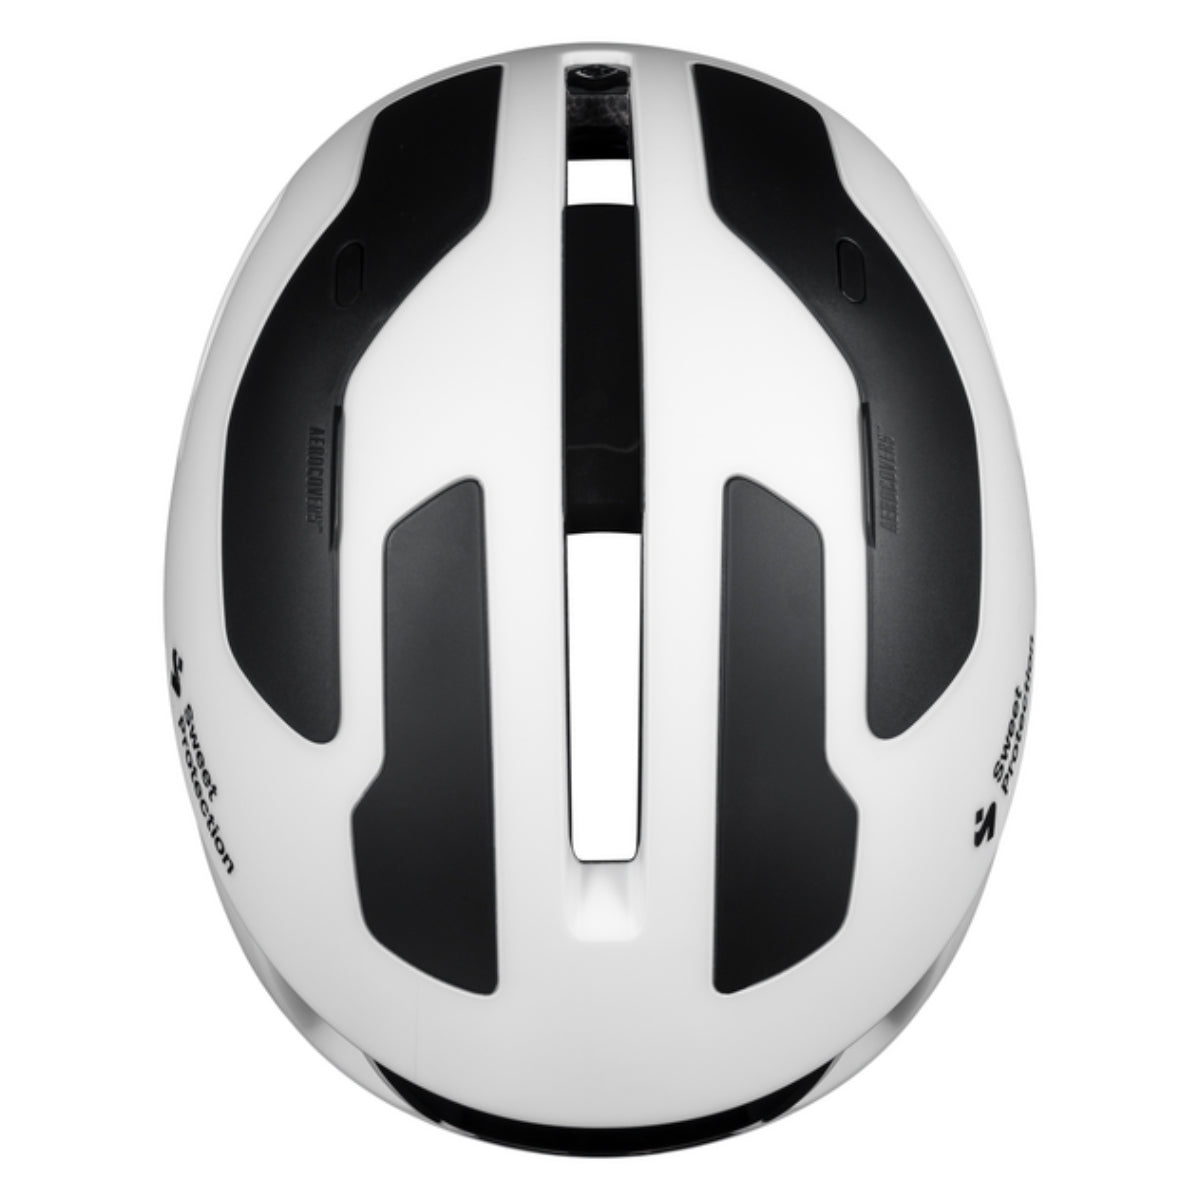 Sweet Protection - Falconer Aero 2Vi Mips Helmet - Satin White